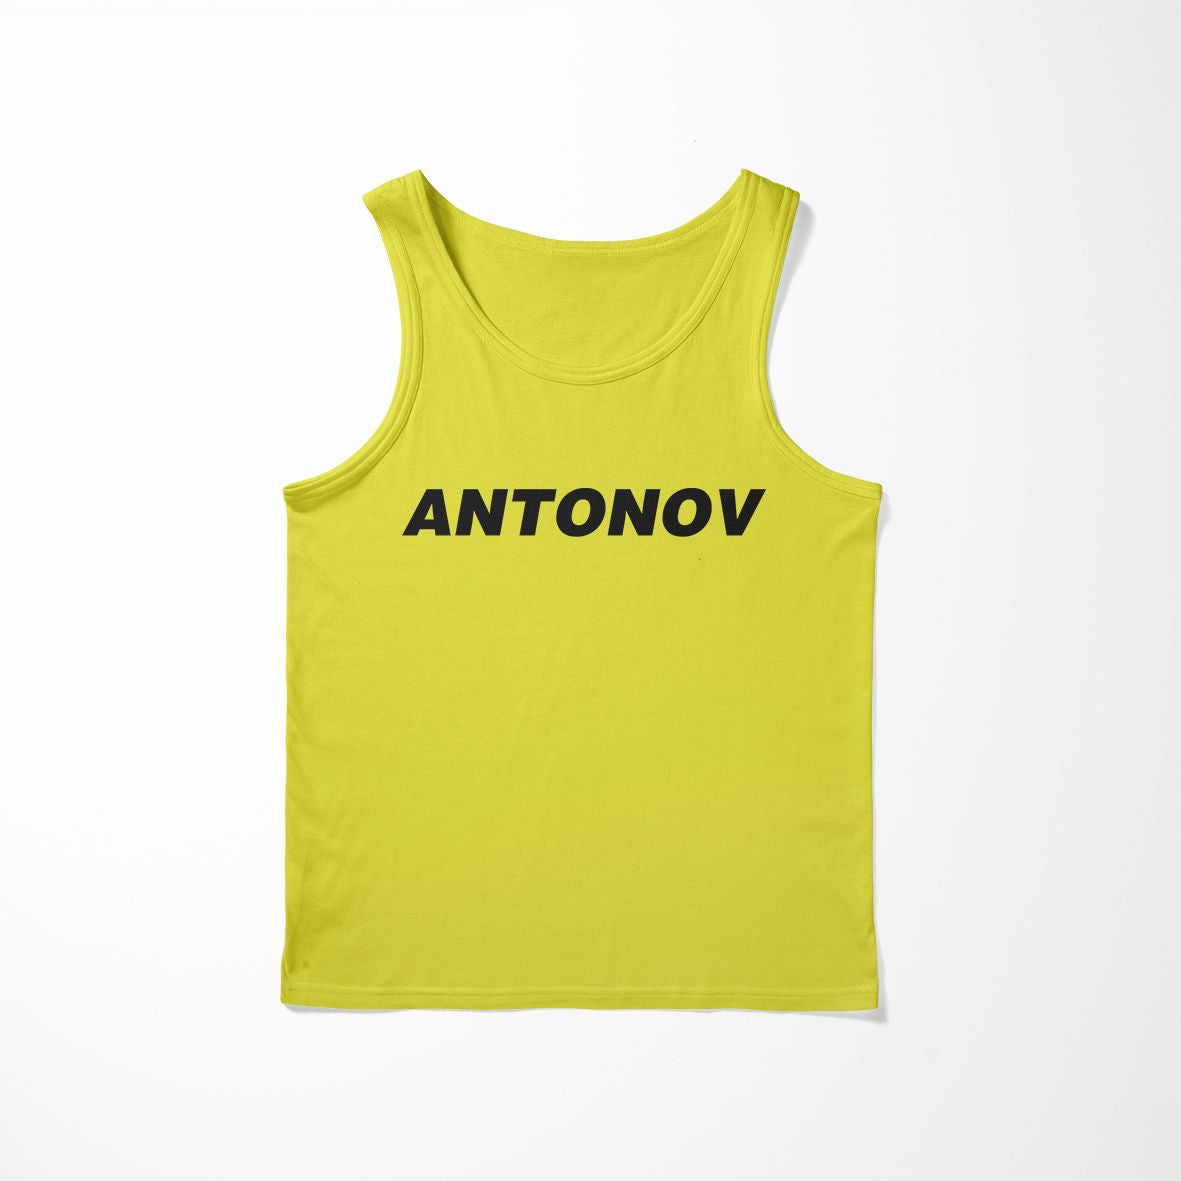 Antonov & Text Designed Tank Top